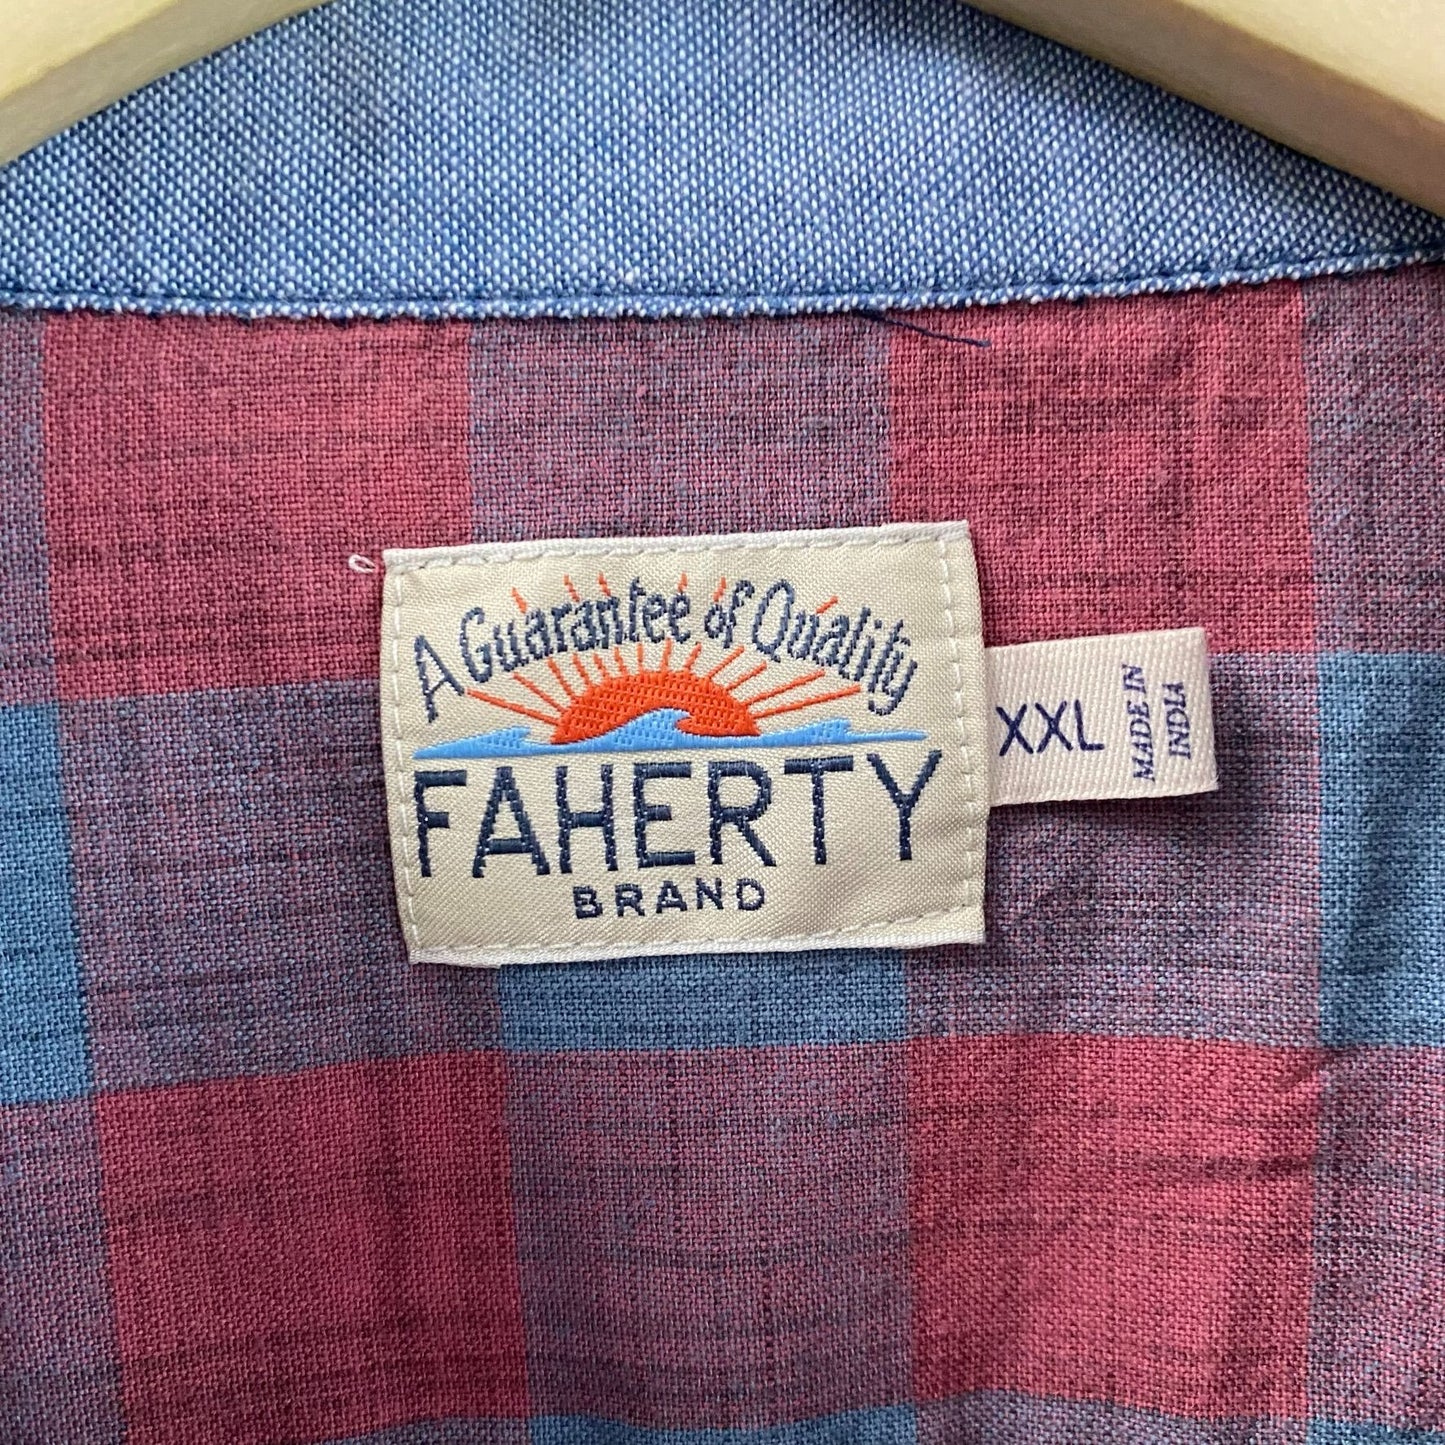 Faherty Checkered Plaid S/S Shirt